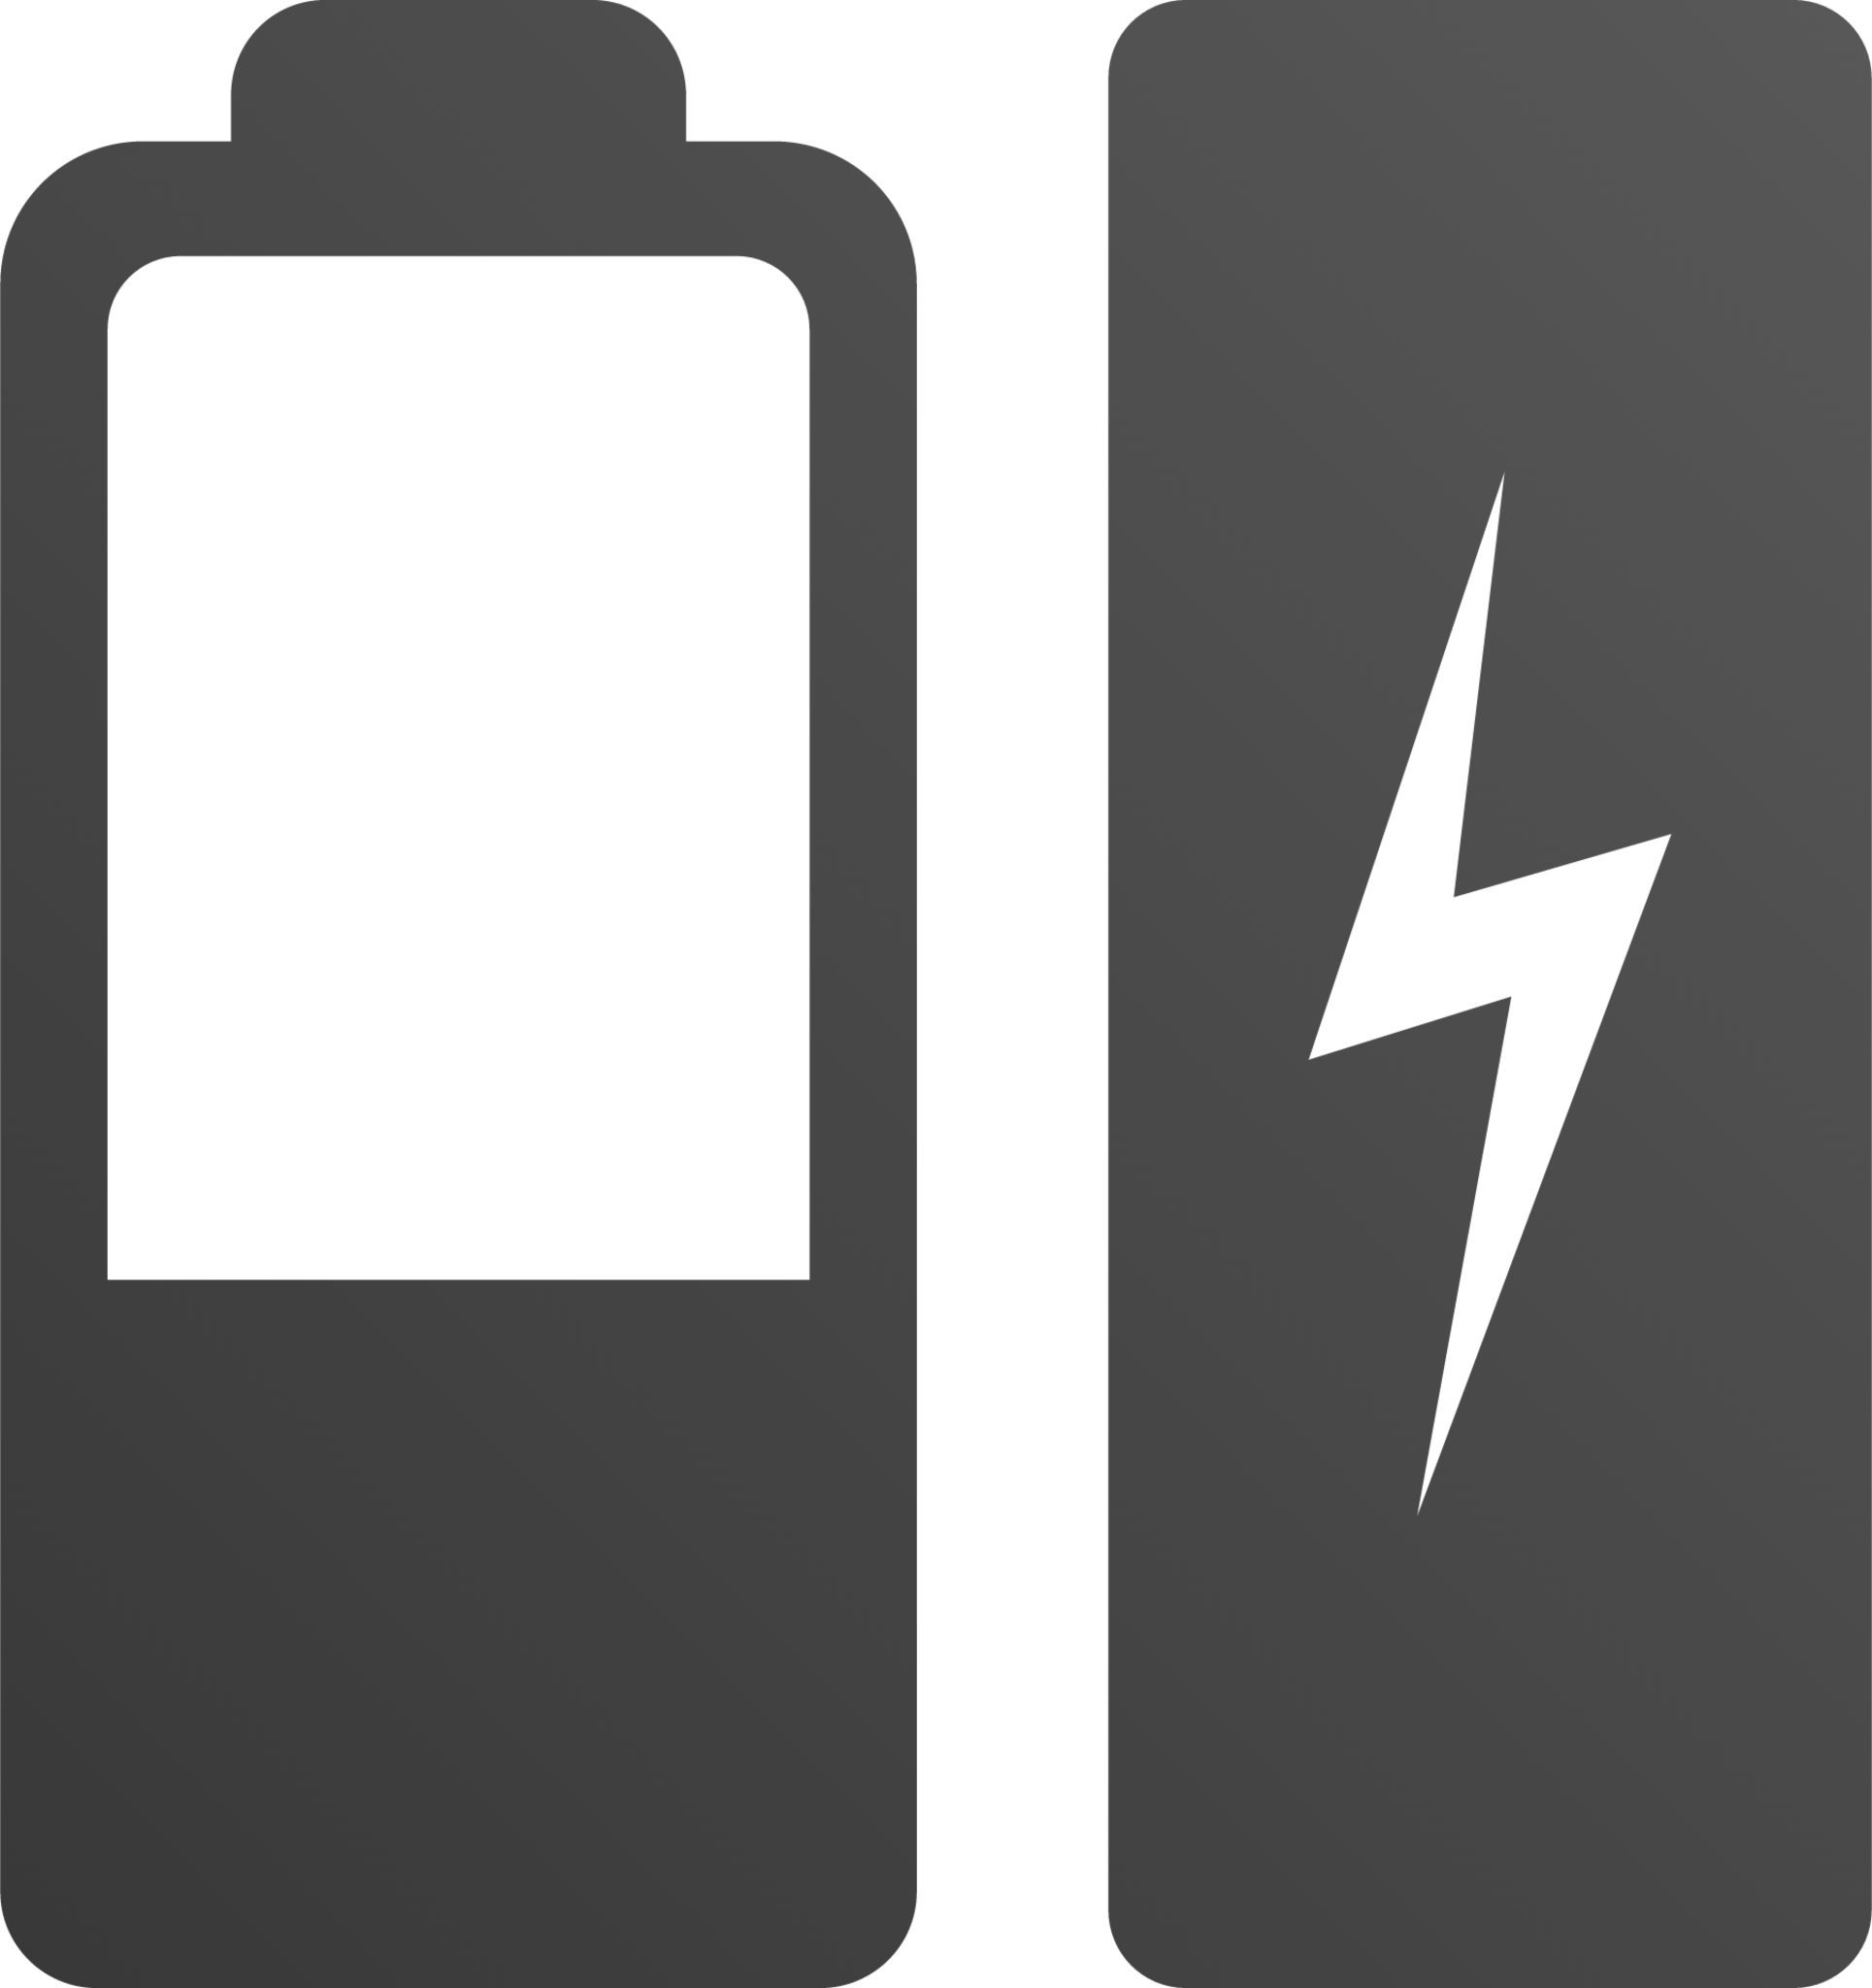 xfpm ups 040 charging icon